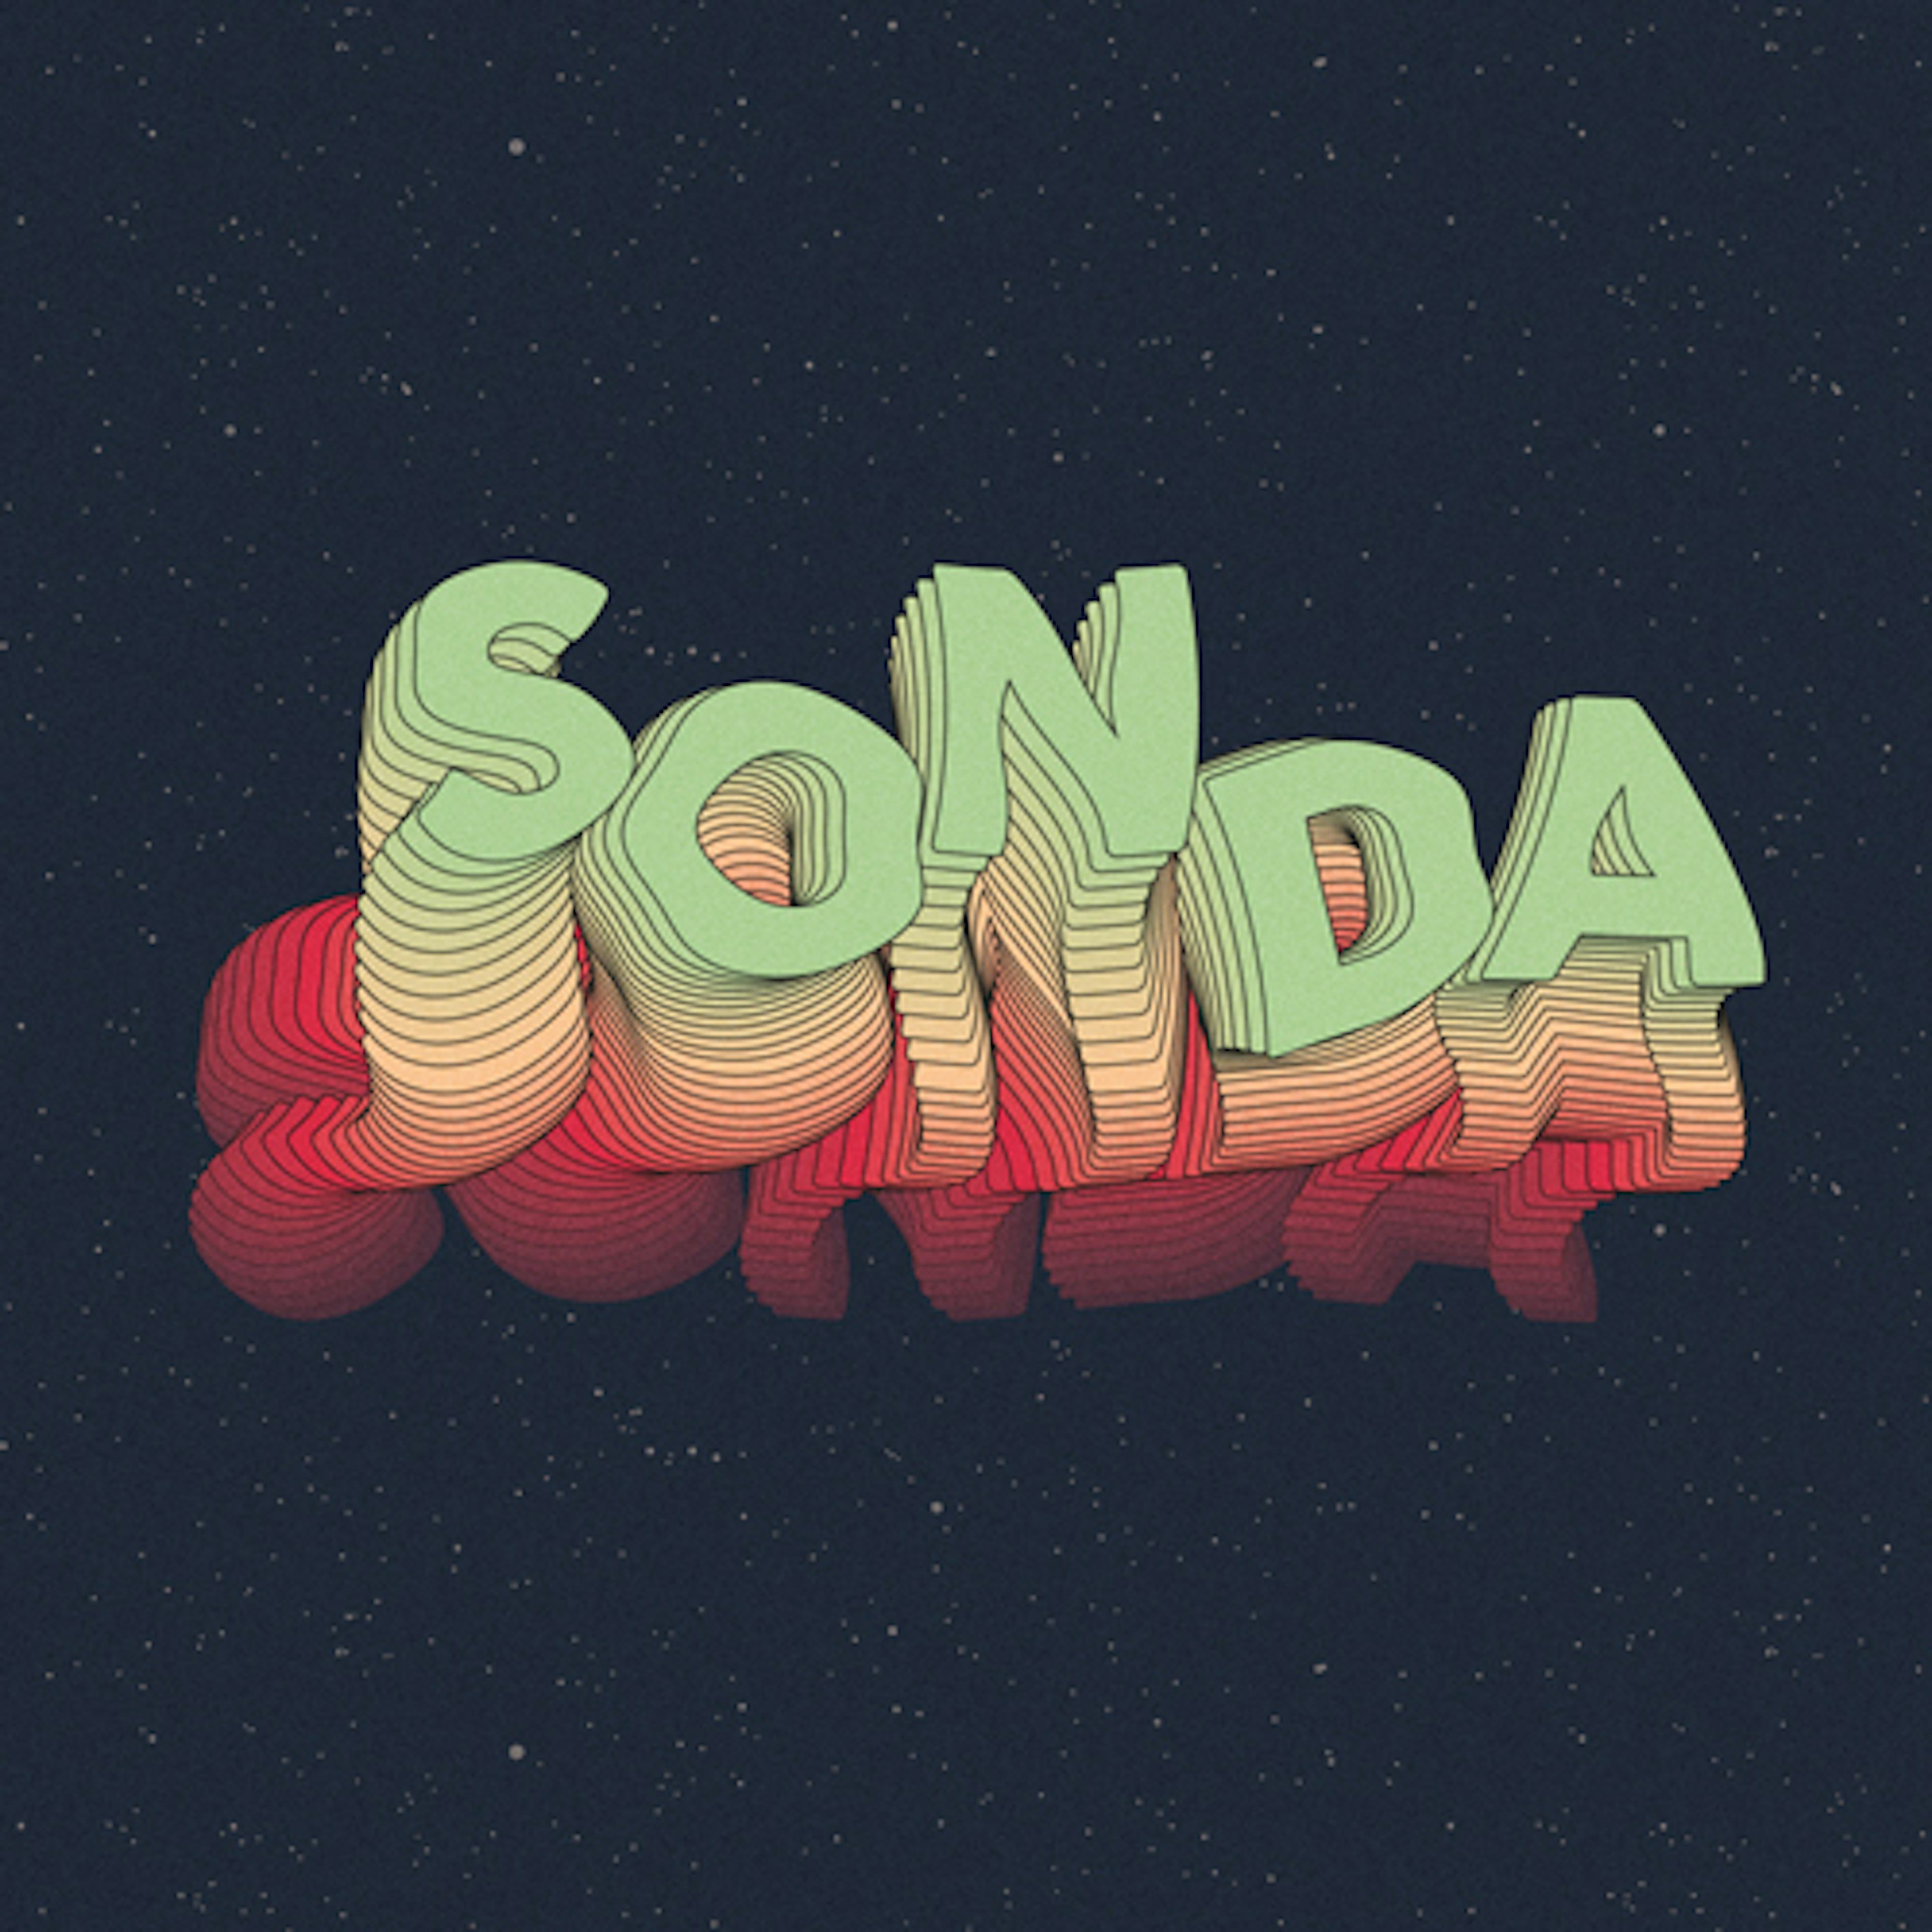 Sonda artwork